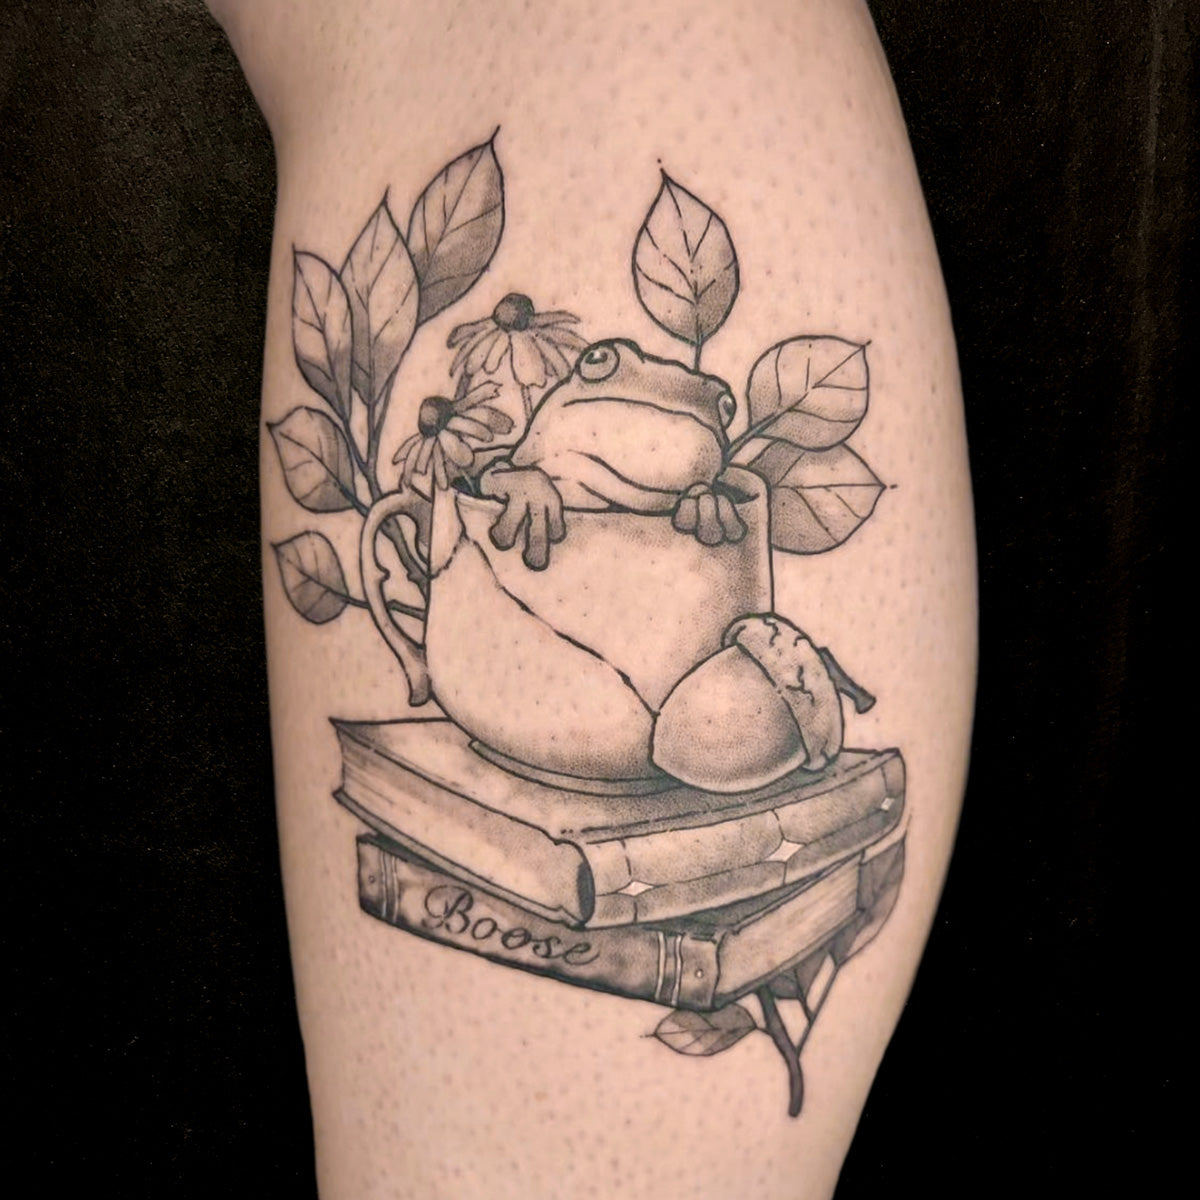 Minimalist book piece by Alison | Bookish tattoos, Tattoos, Cool tattoos